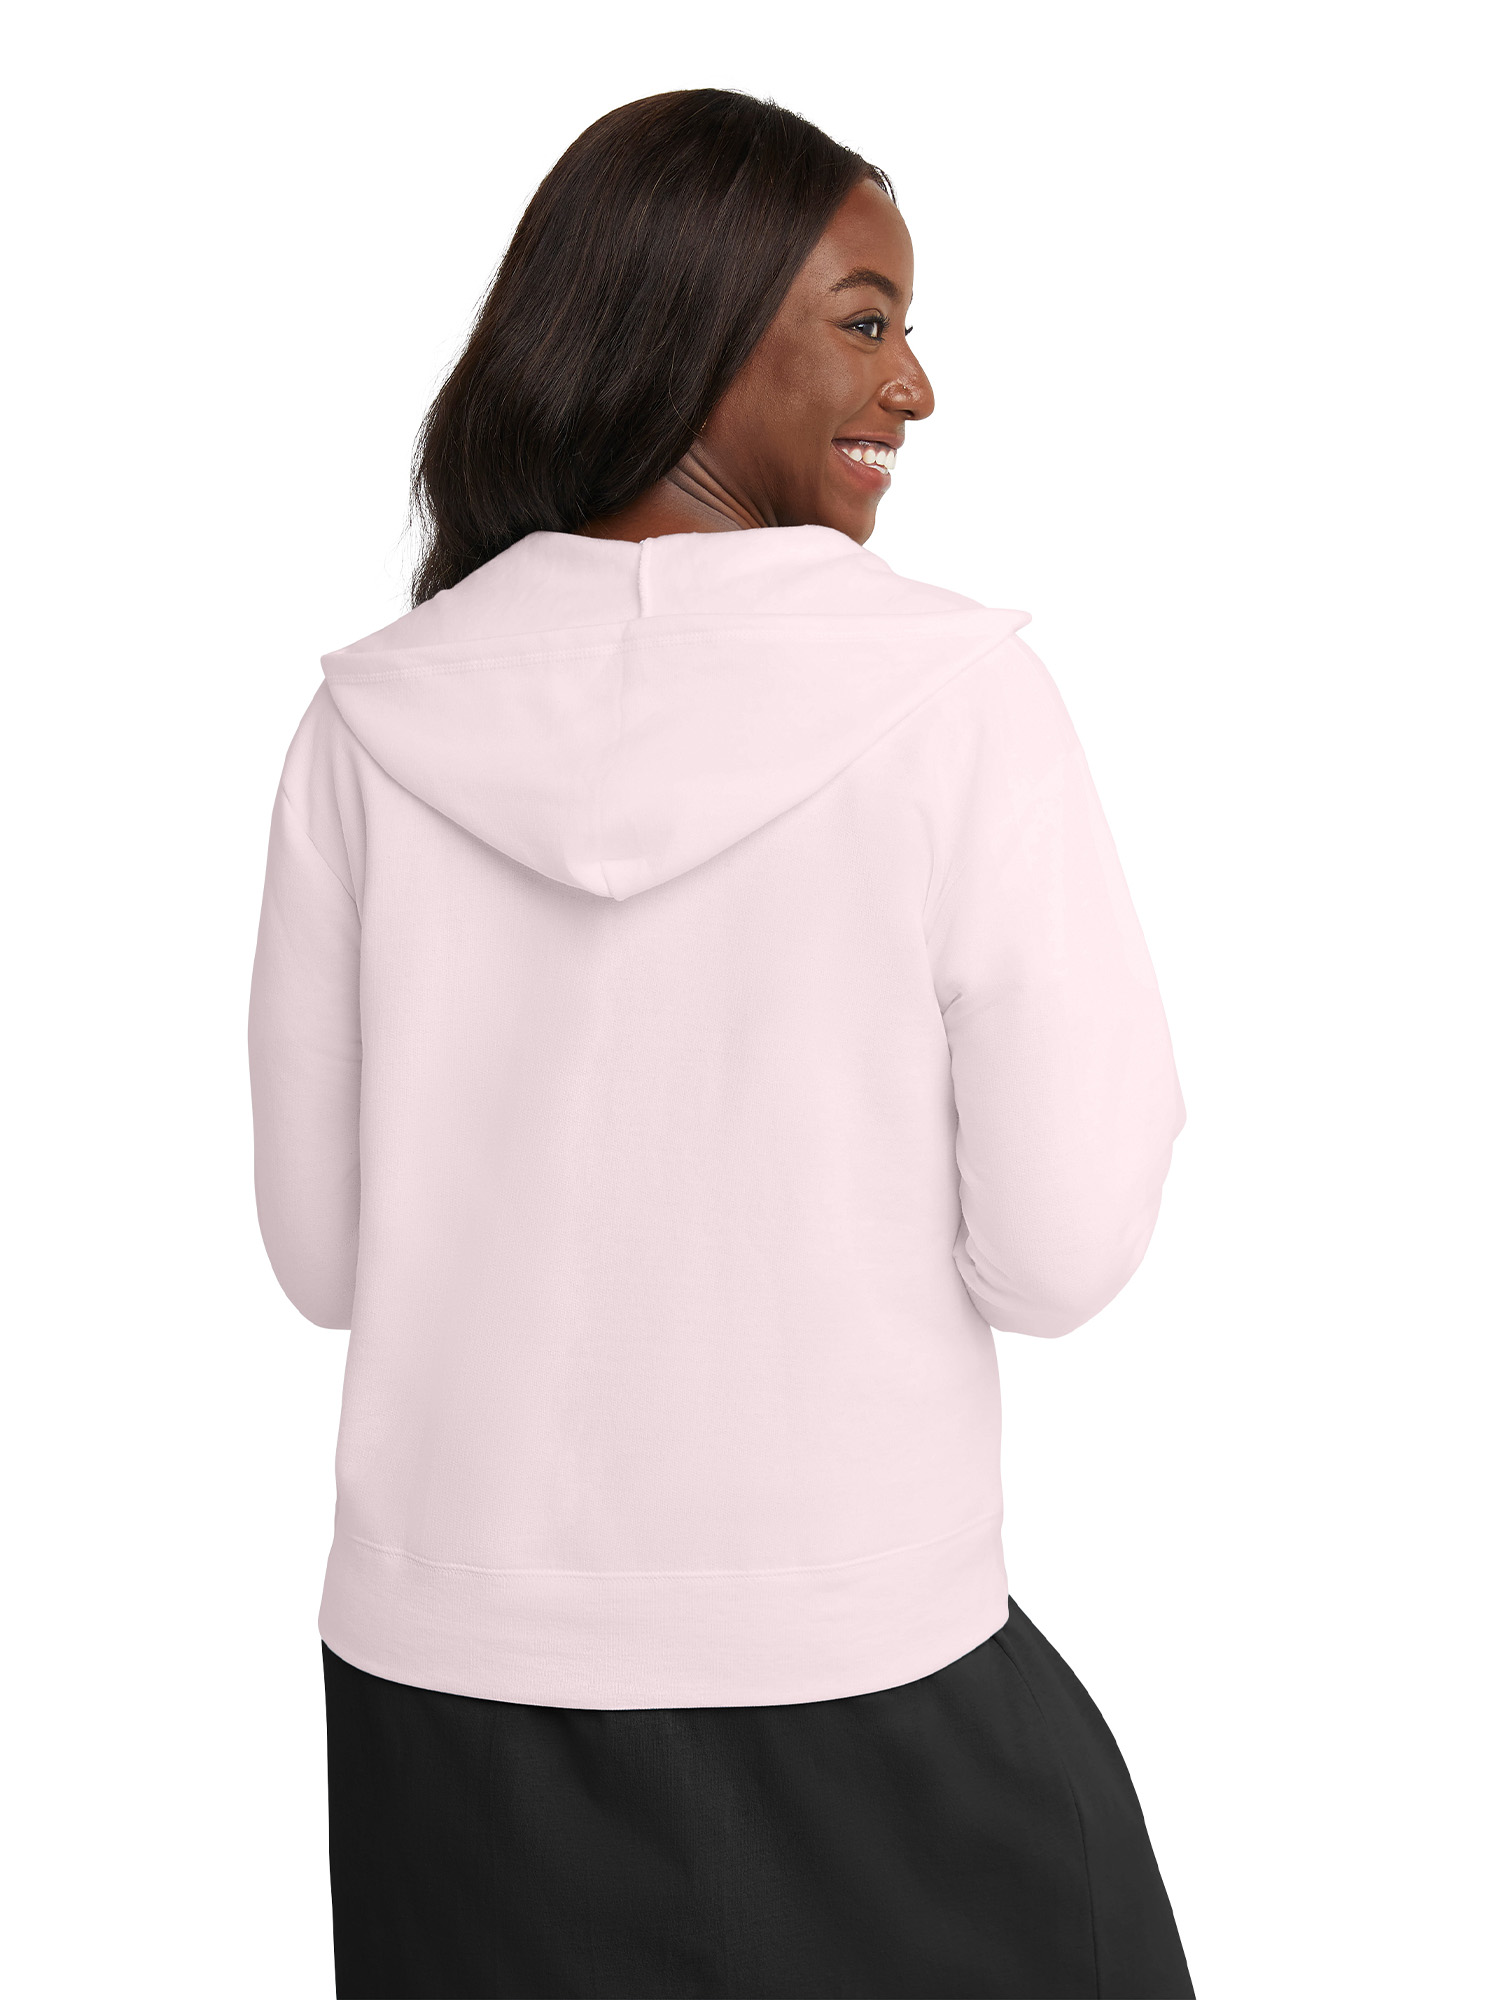 Hanes ComfortSoft EcoSmart Women's Fleece Full-Zip Hoodie Sweatshirt, Sizes S-XXL - image 3 of 6